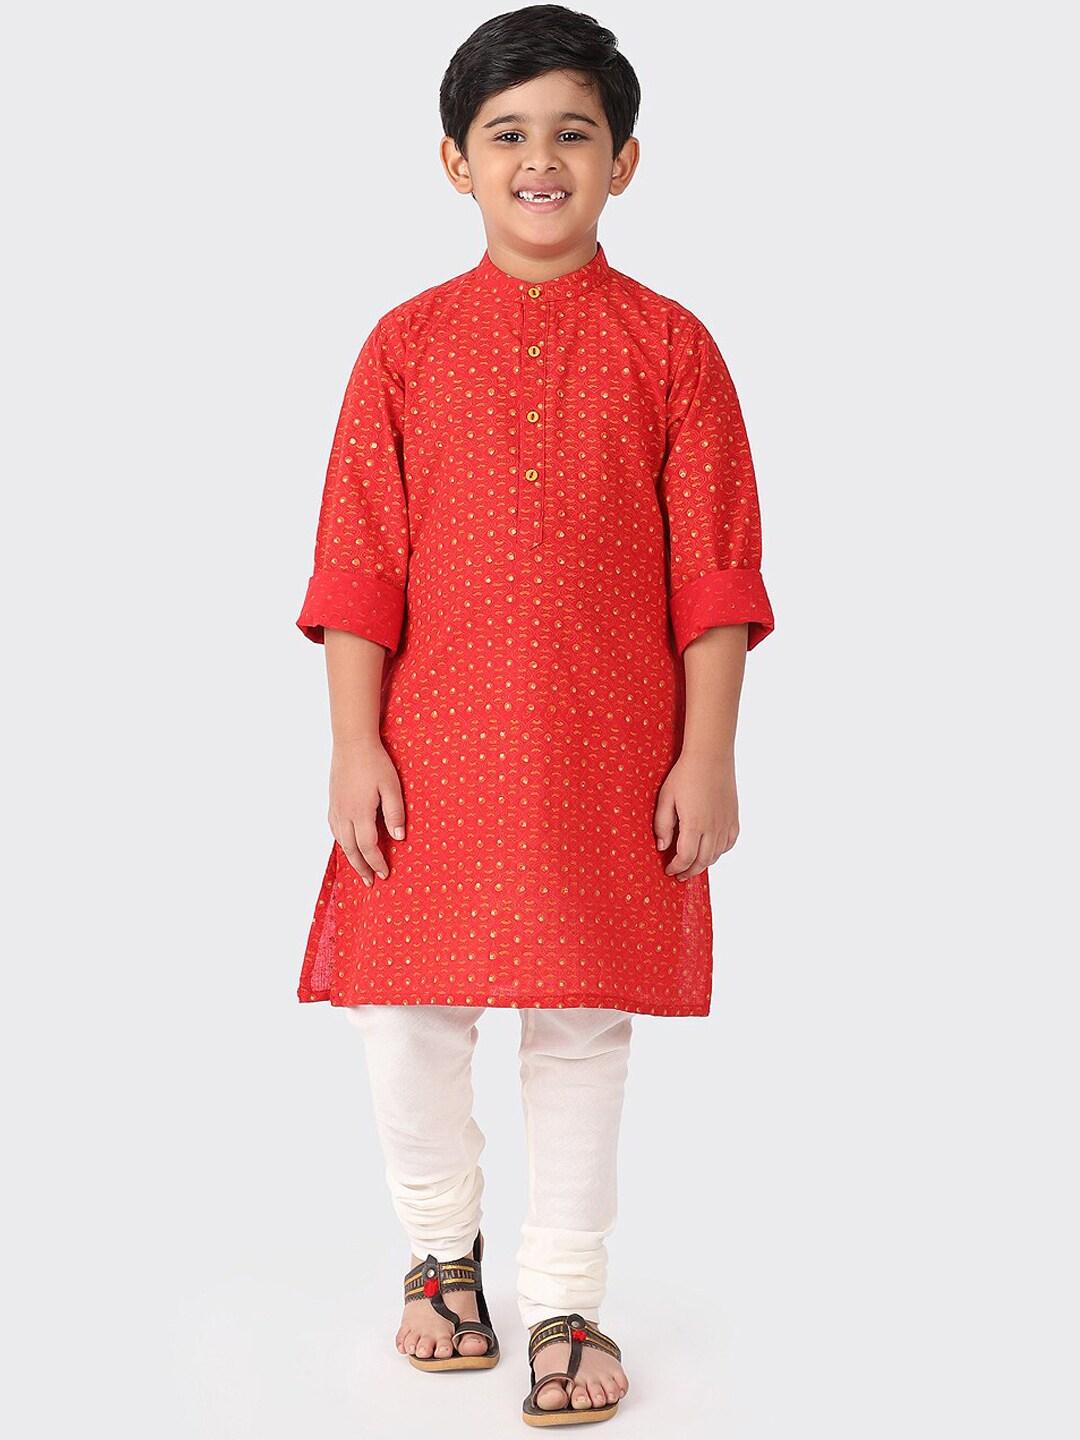 fabindia boys red ethnic motifs printed cotton kurta